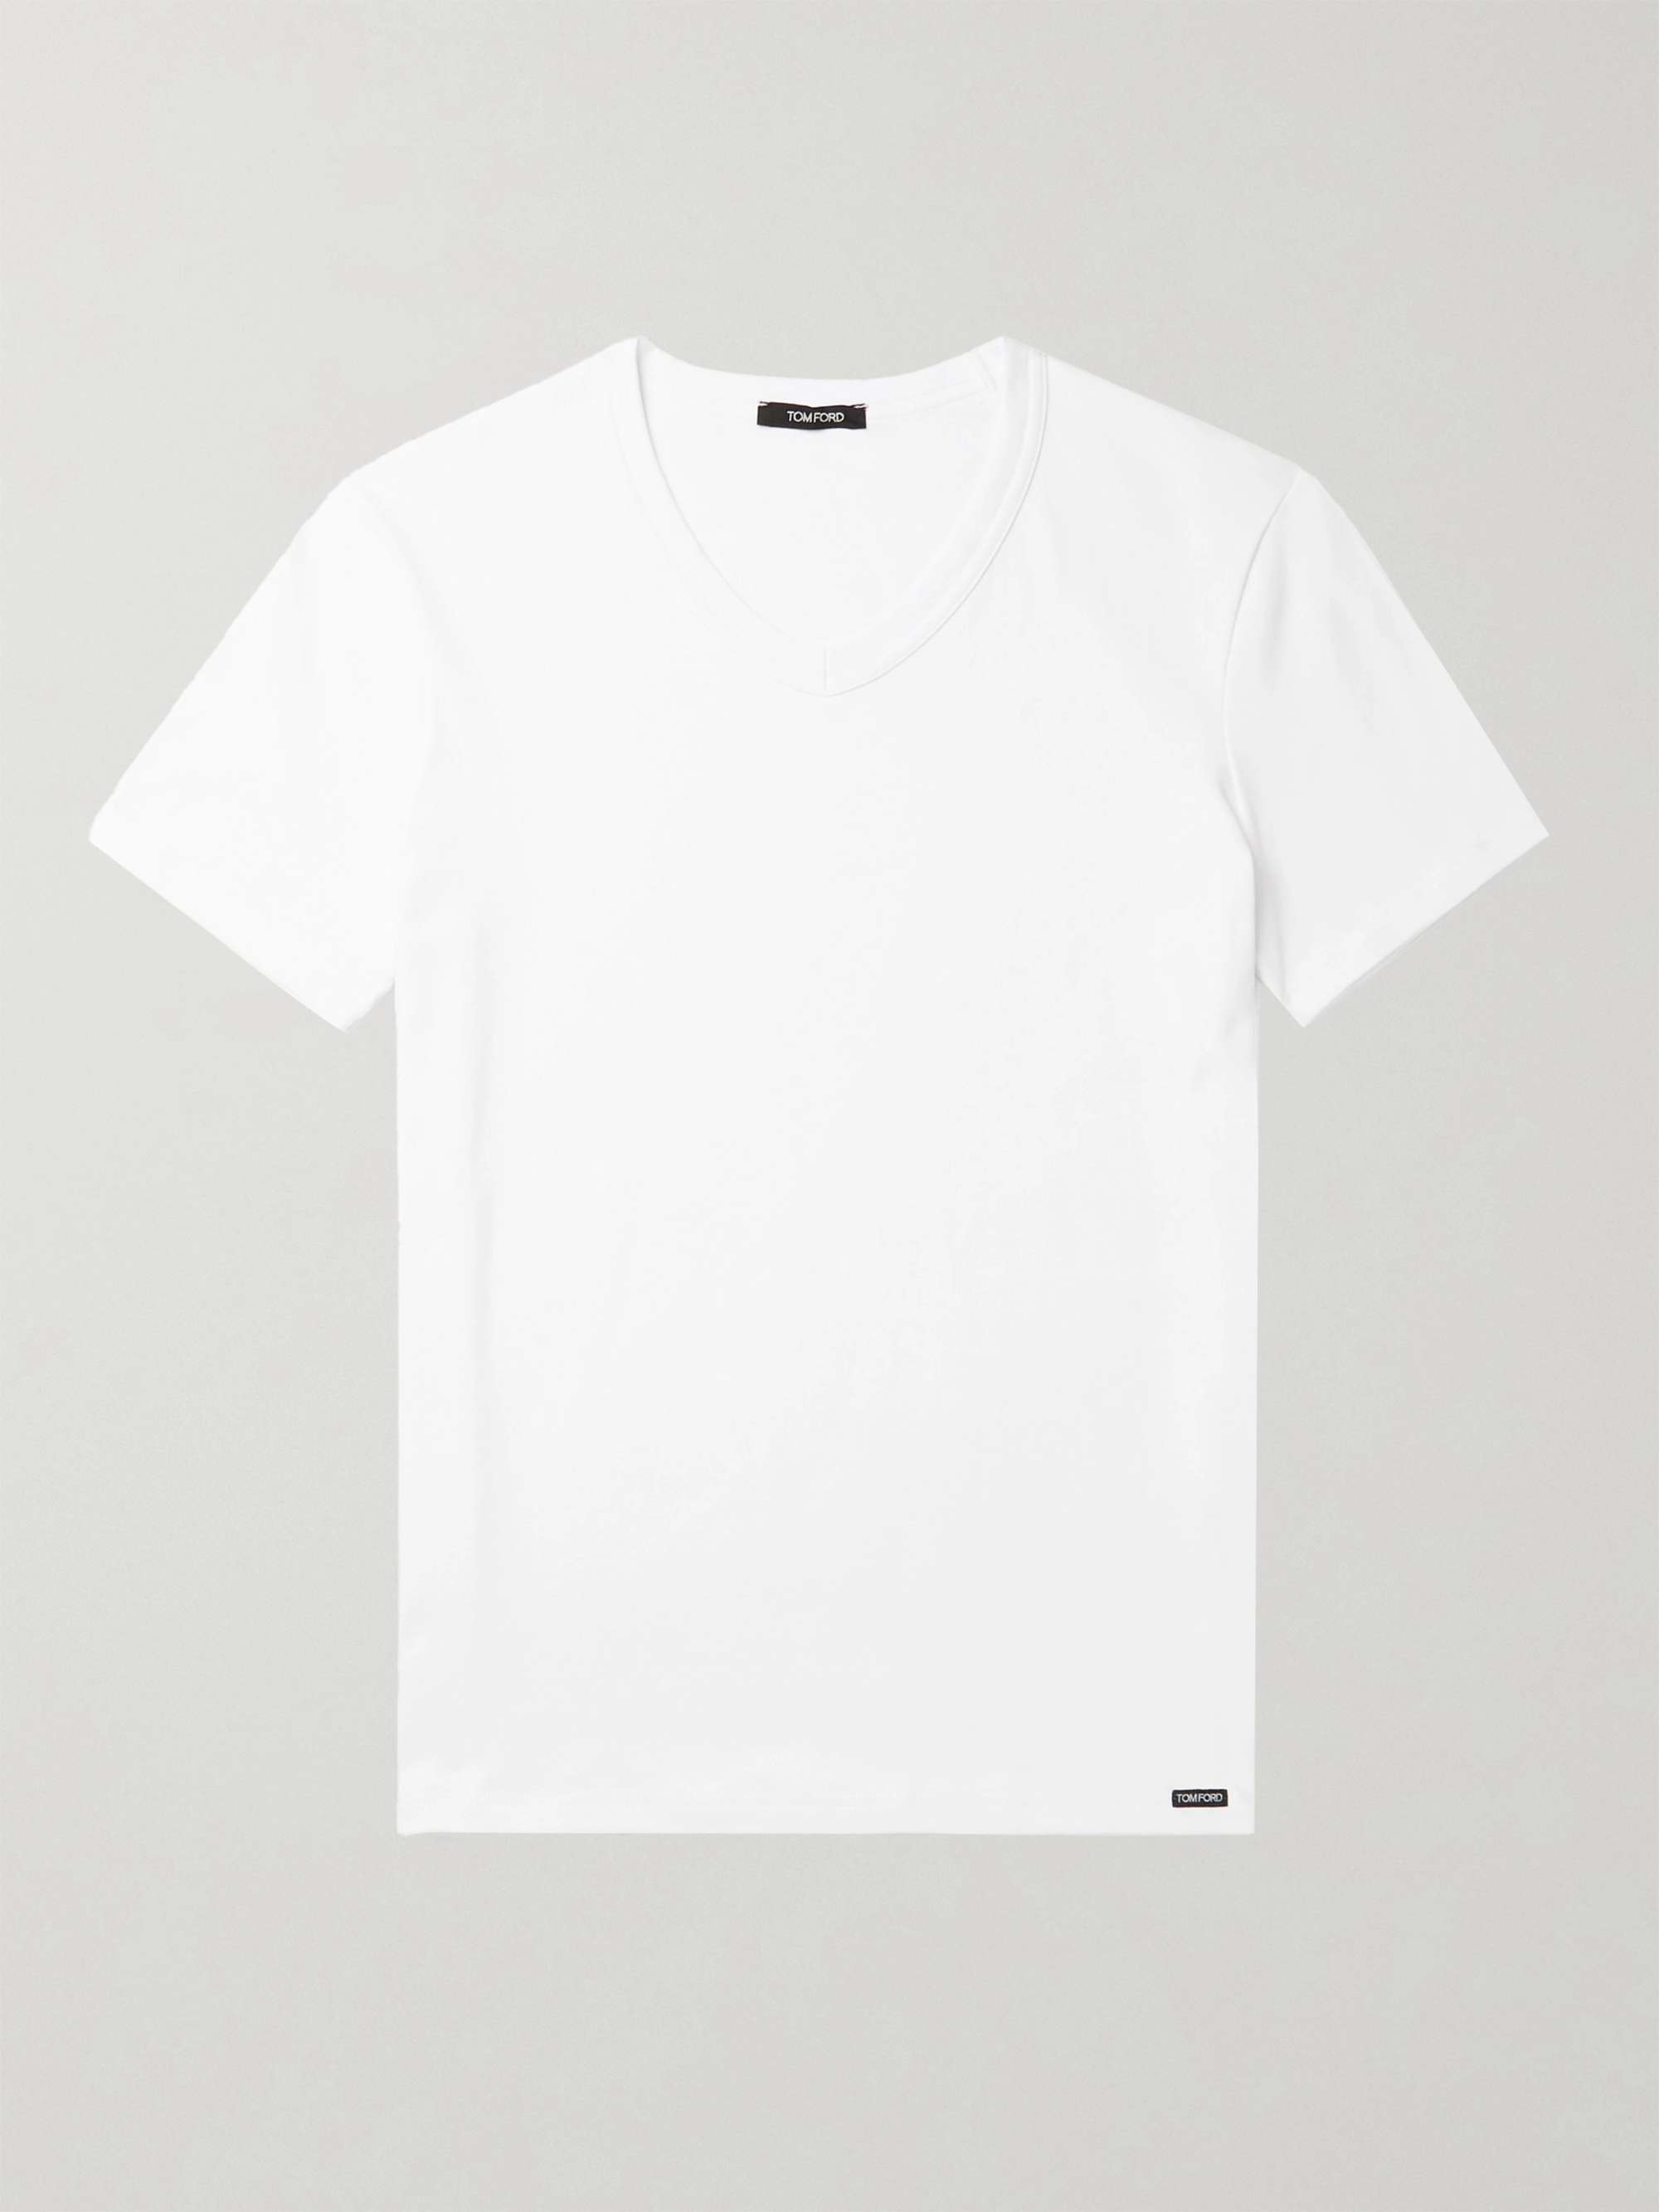 TOM FORD Slim-Fit Stretch-Cotton Jersey T-Shirt for Men | MR PORTER